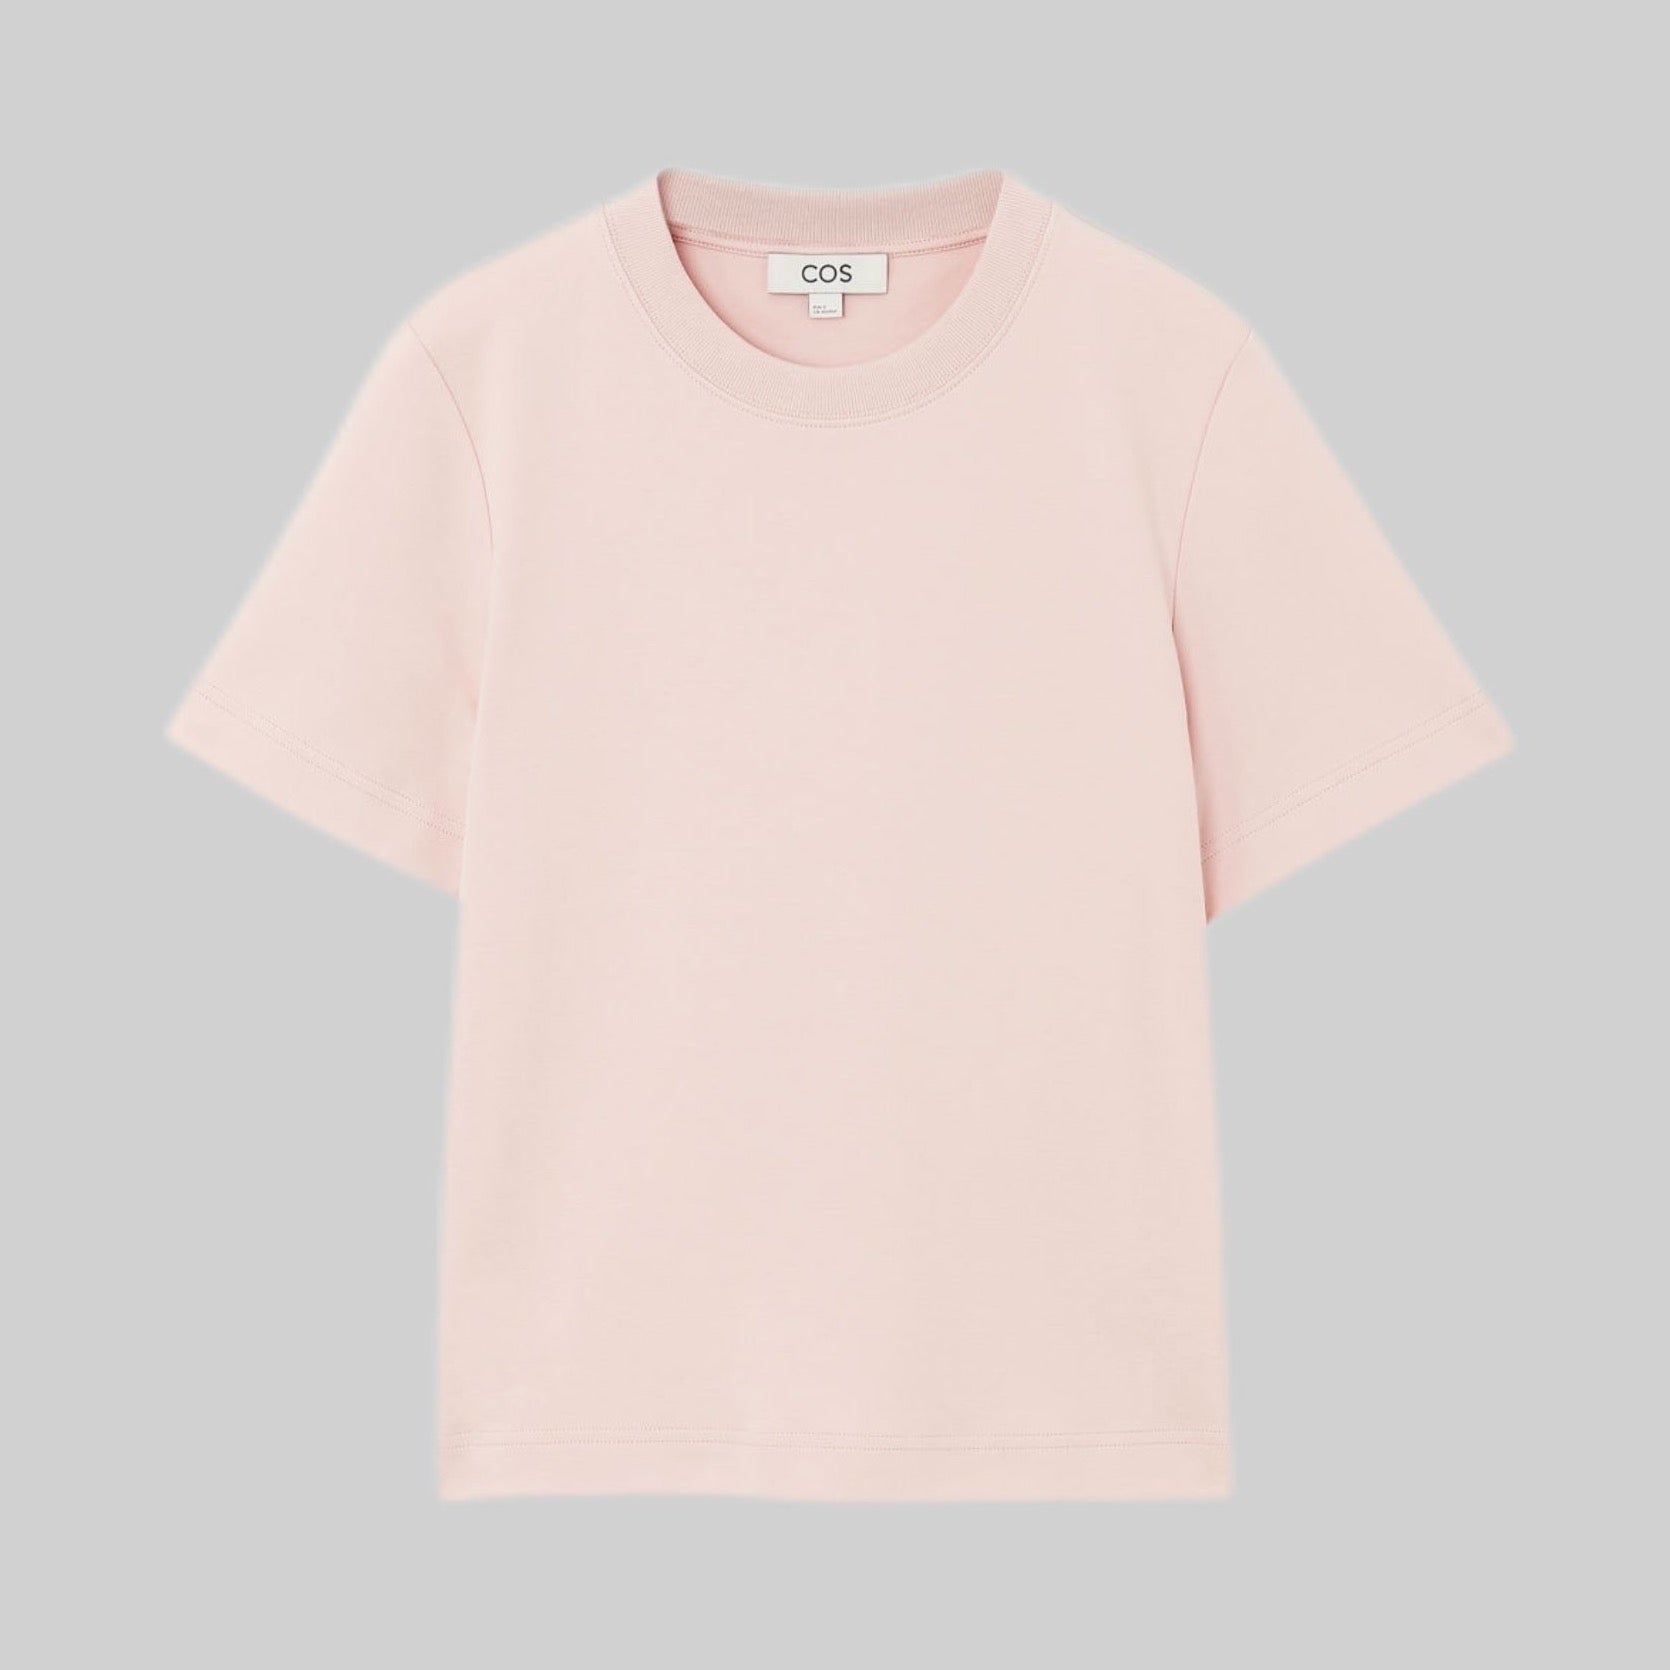 Cos t-shirt, pink, frontside, women